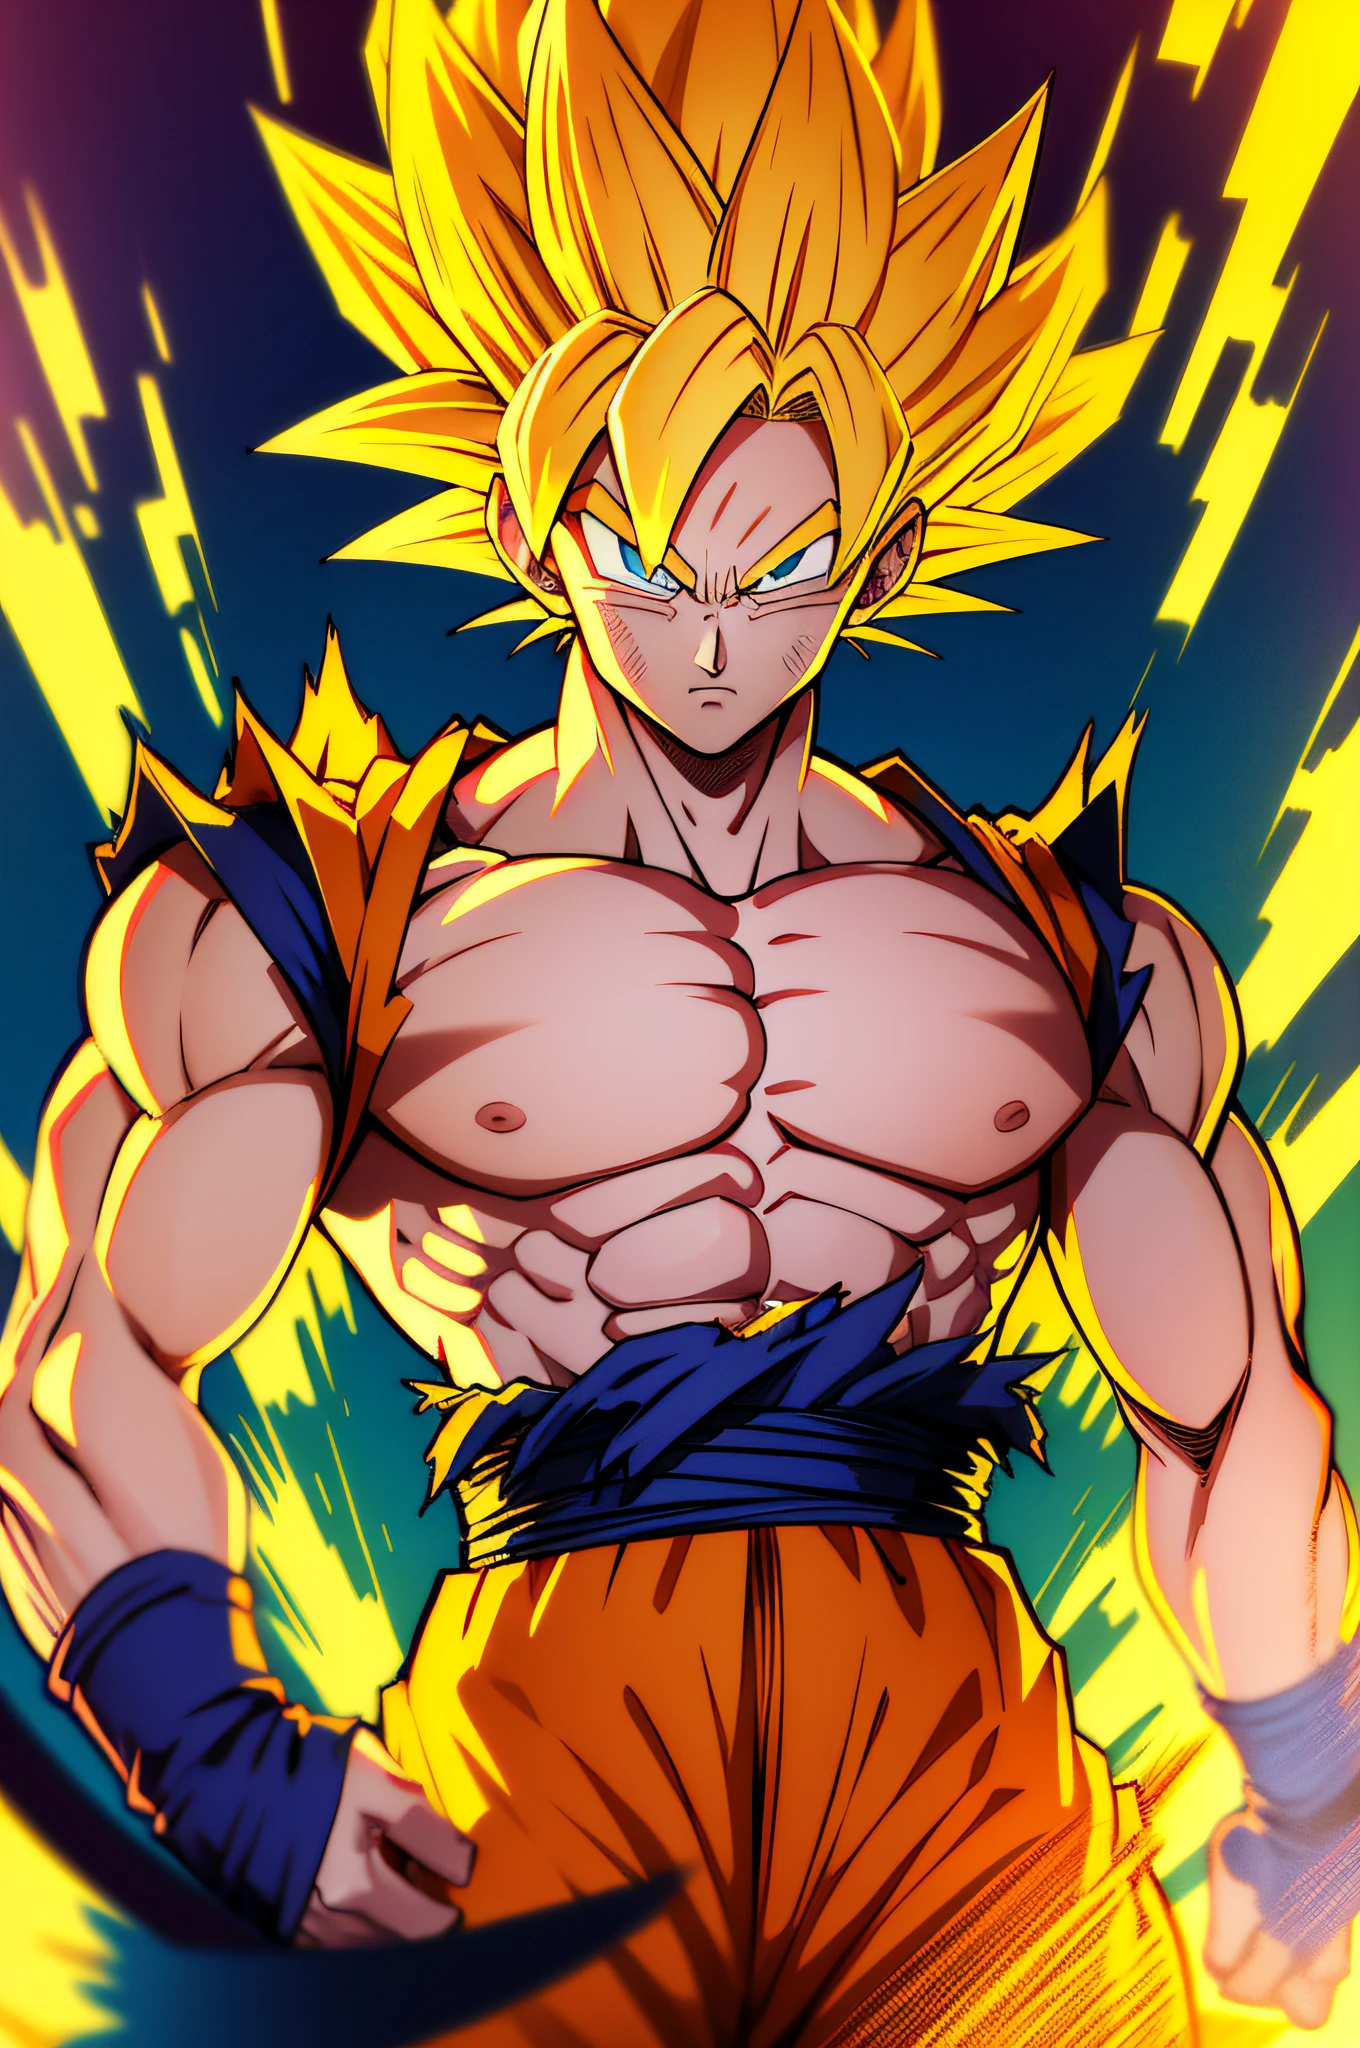 Goku, 2d dragon ball punk blonde super saiyan furious planet namek centered super strong detailed gorgeous vibrant muscles